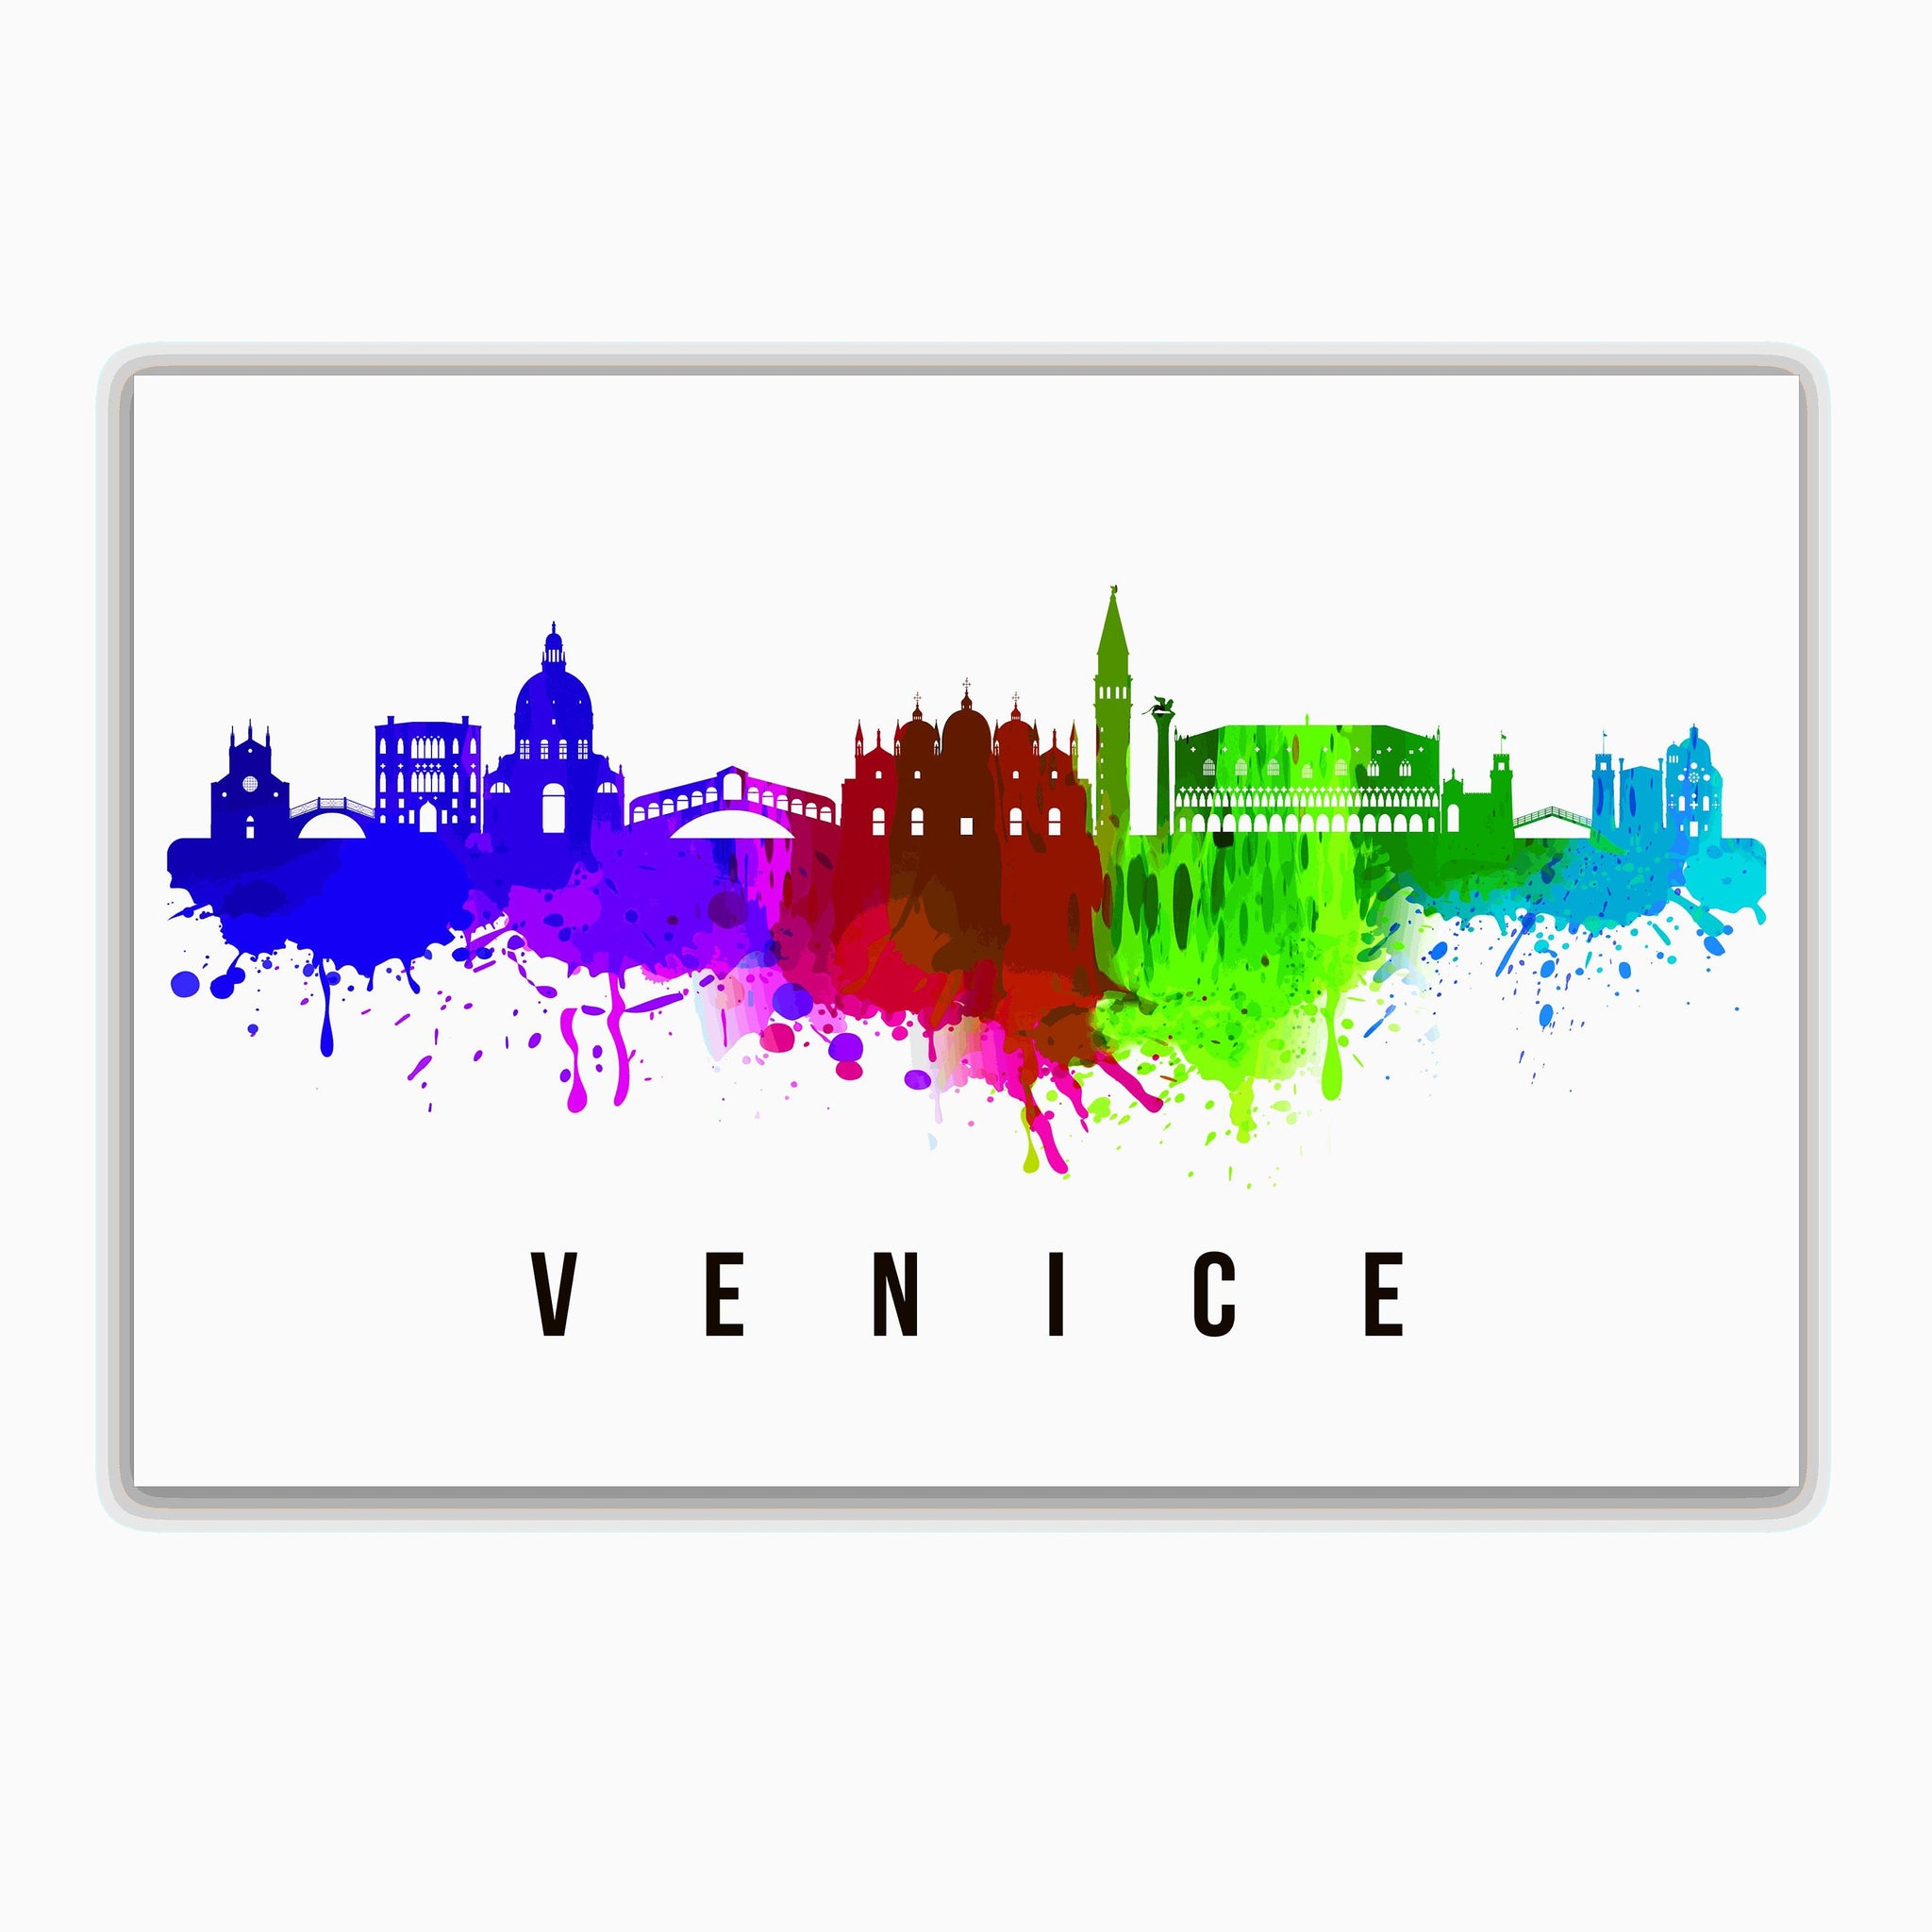 VENICE - ITALY Poster, Skyline Poster Cityscape and Landmark Venice City Illustration Home Wall Art, Office Decor